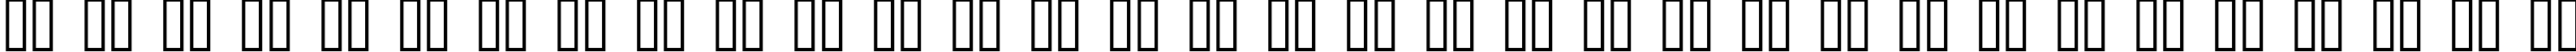 Пример написания русского алфавита шрифтом Pecot Outline Oblique